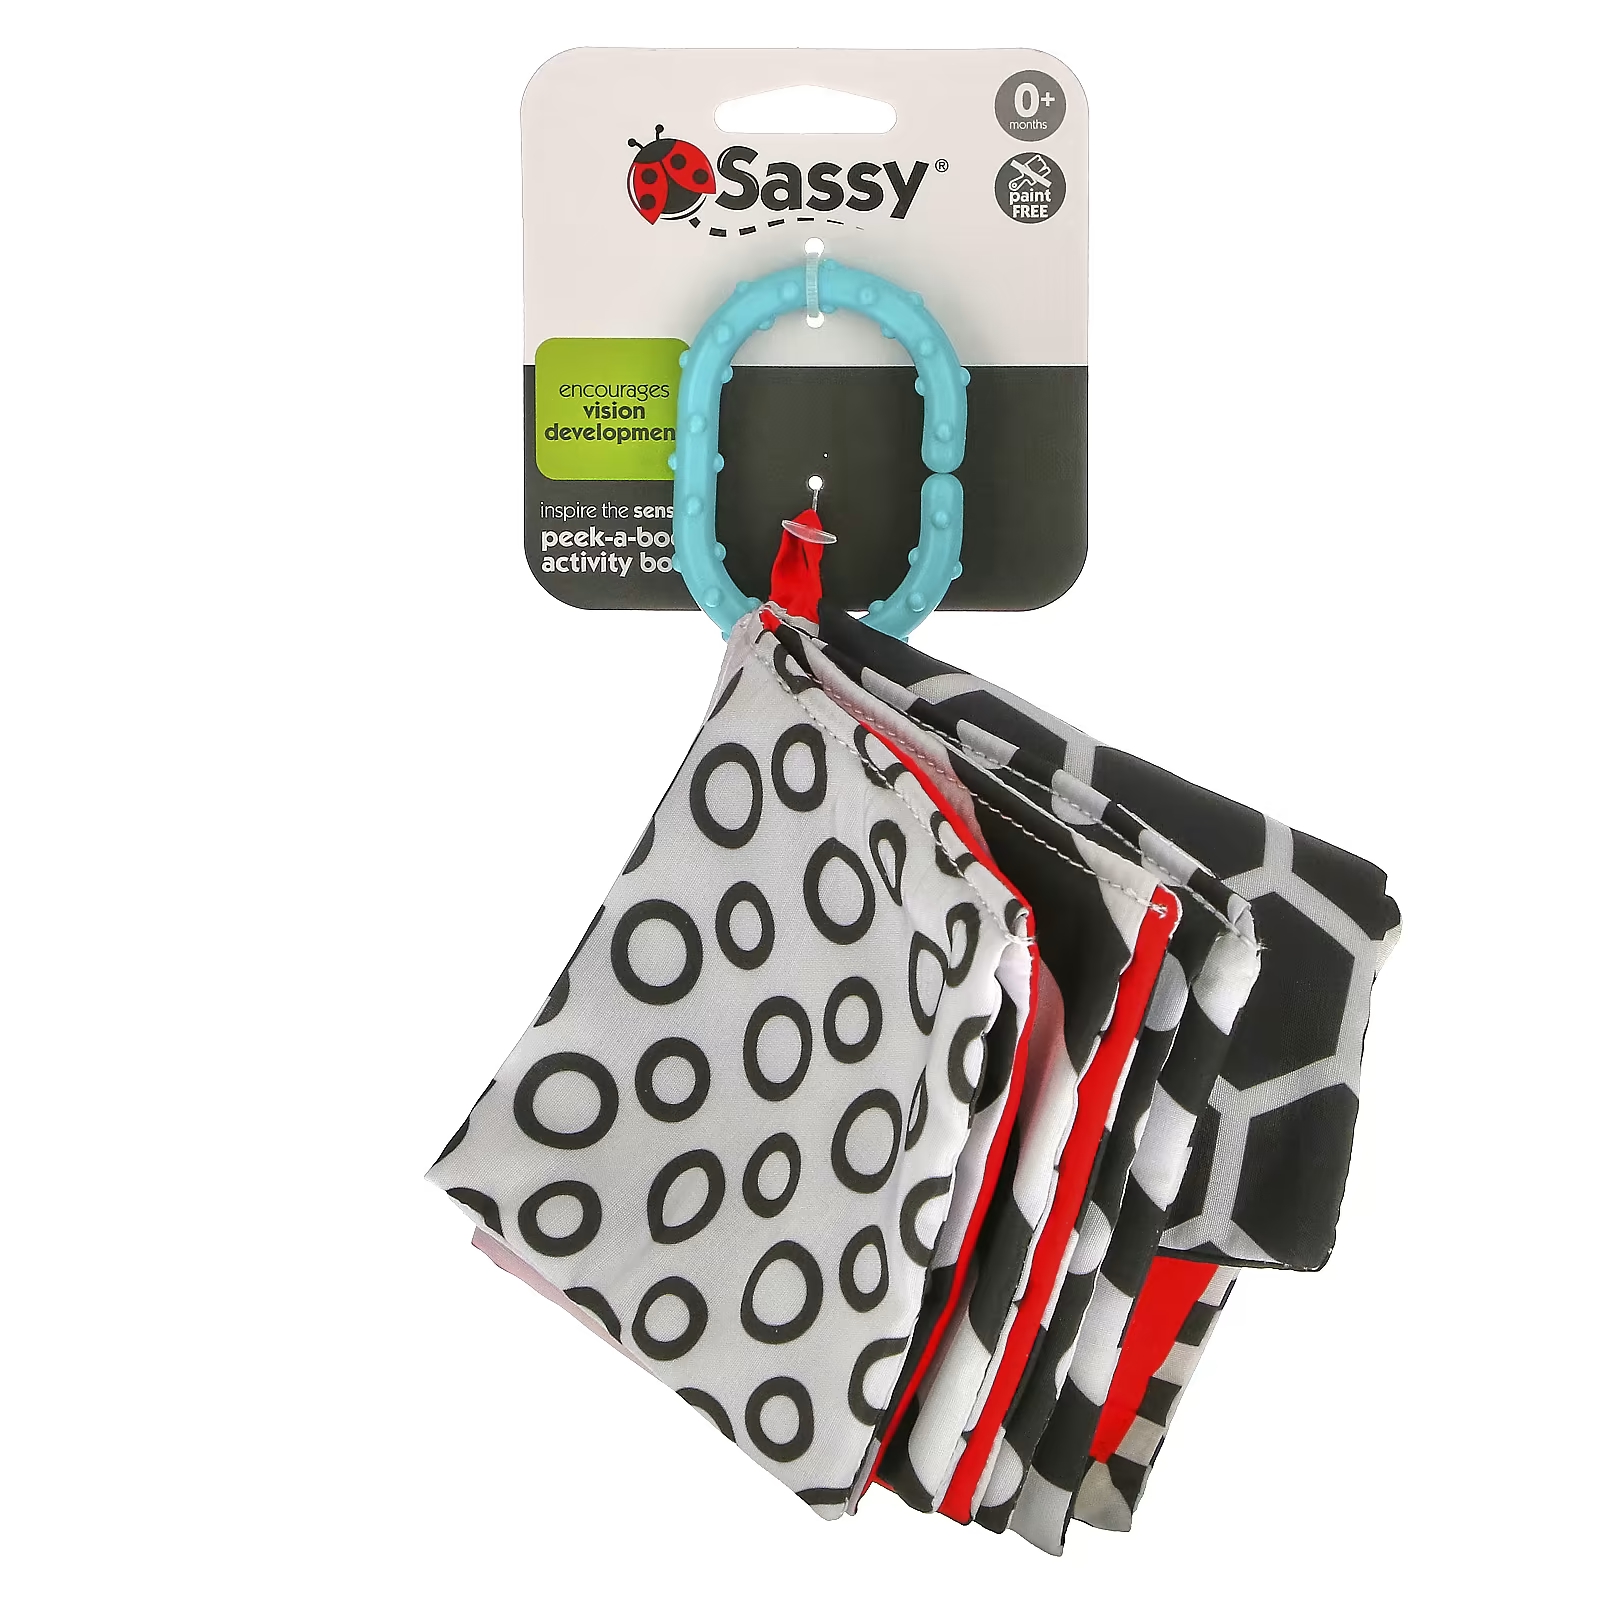 Развивающая тетрадь Sassy Inspire The Senses Peek-A-Boo для детей от 0 месяцев, 1 шт.